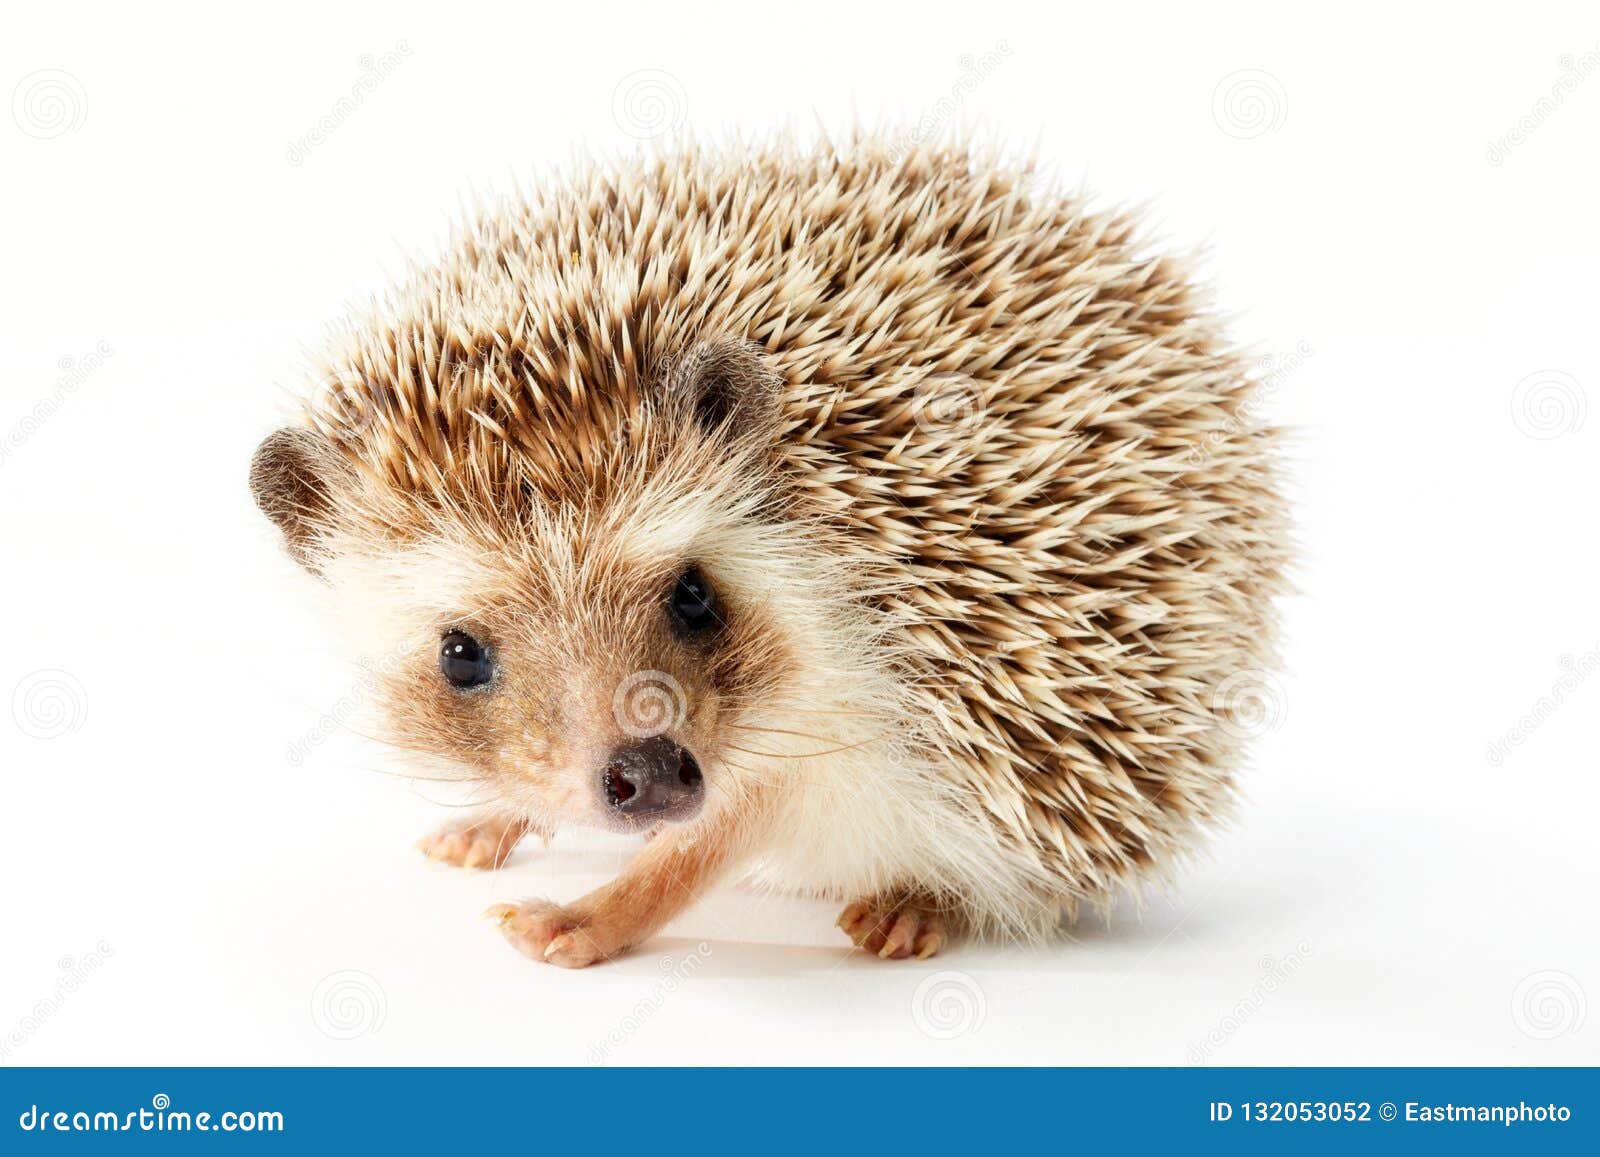 cute hedgehog on white